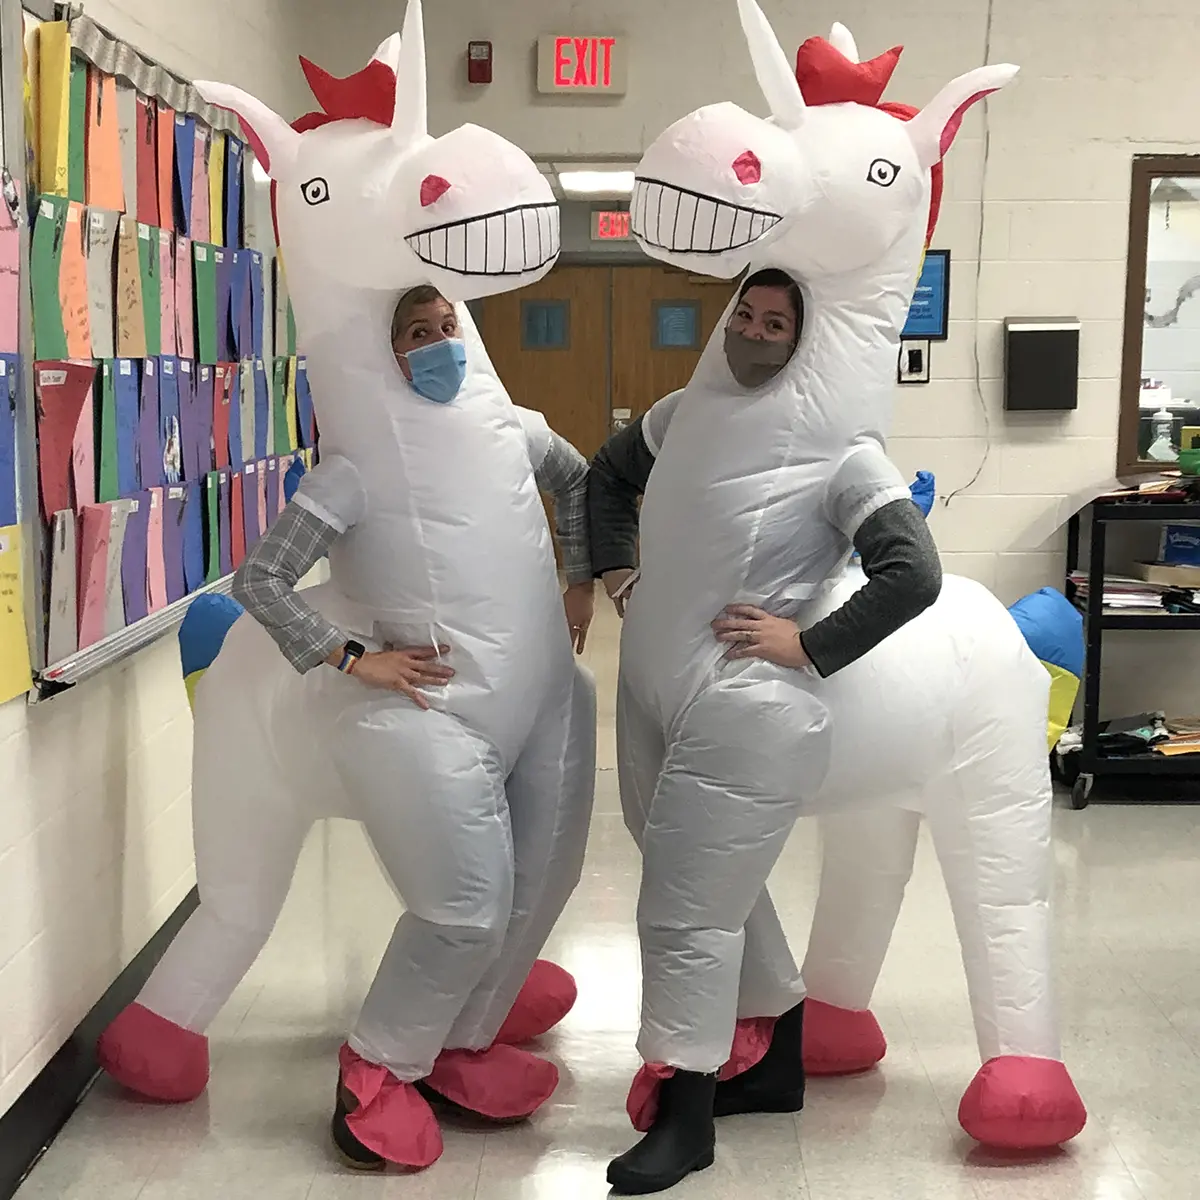 Two teachers wear inflatable unicorn costumes